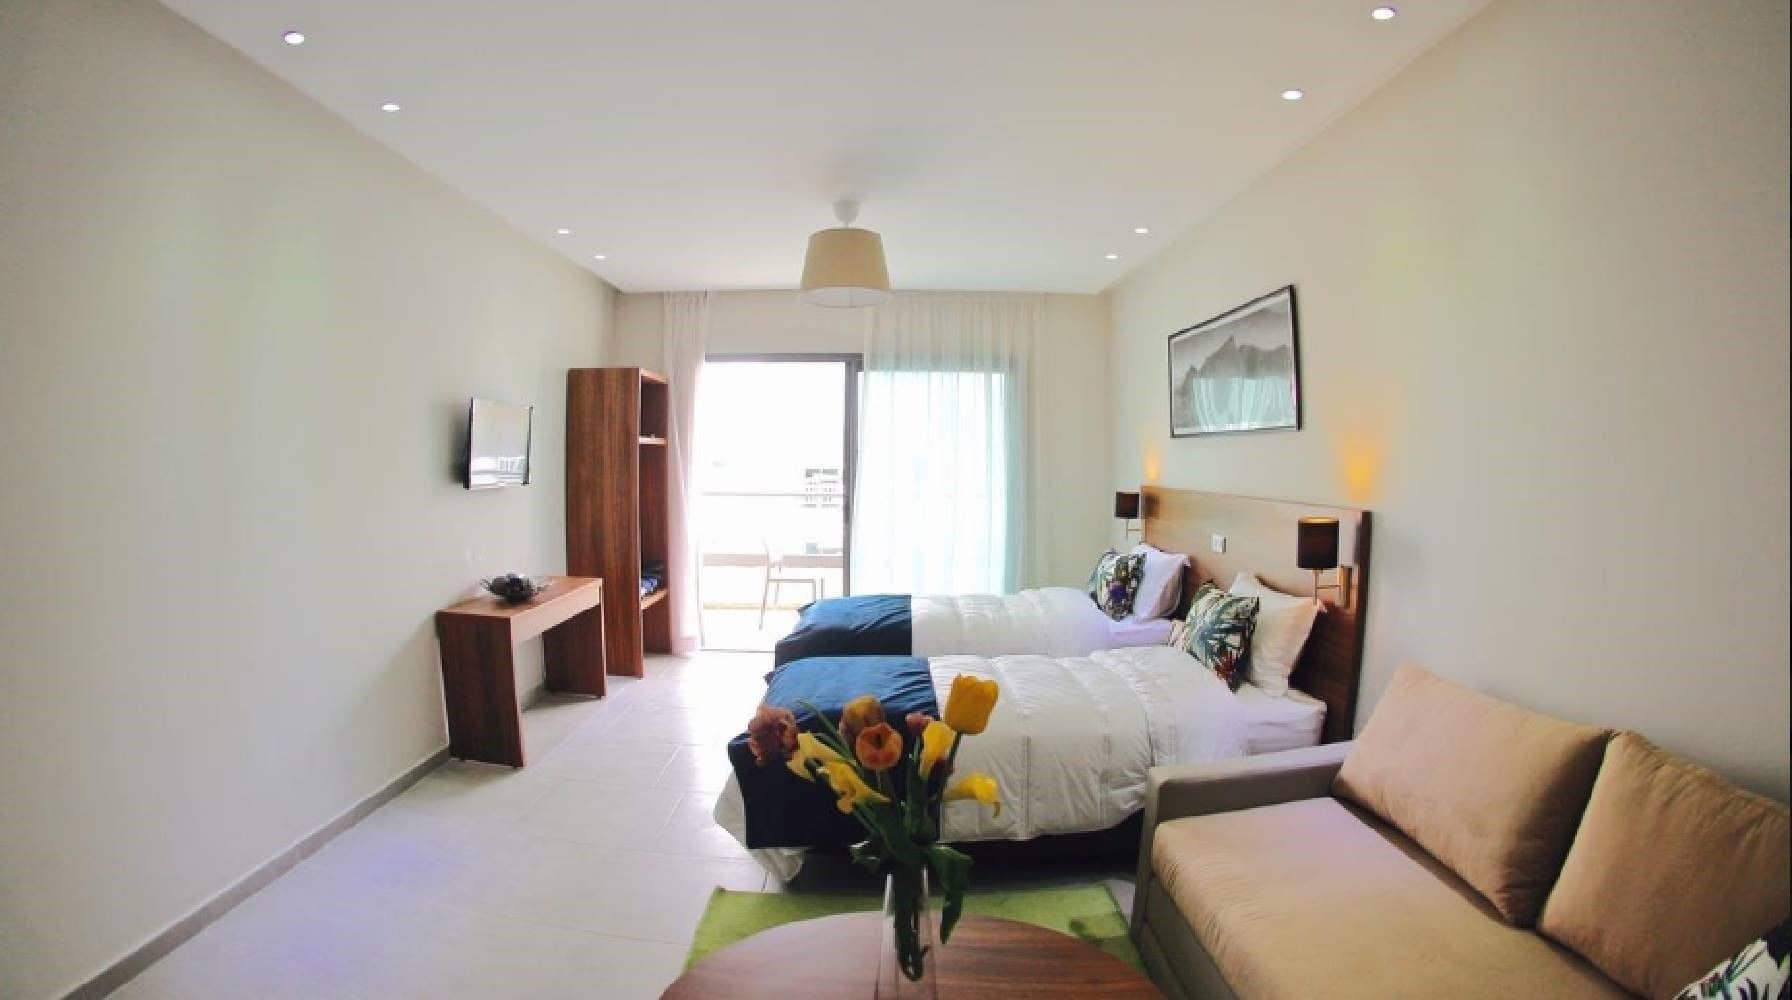 L'Escale Suites Residence Hoteliere By 7Av Hotels 穆罕默迪耶 外观 照片